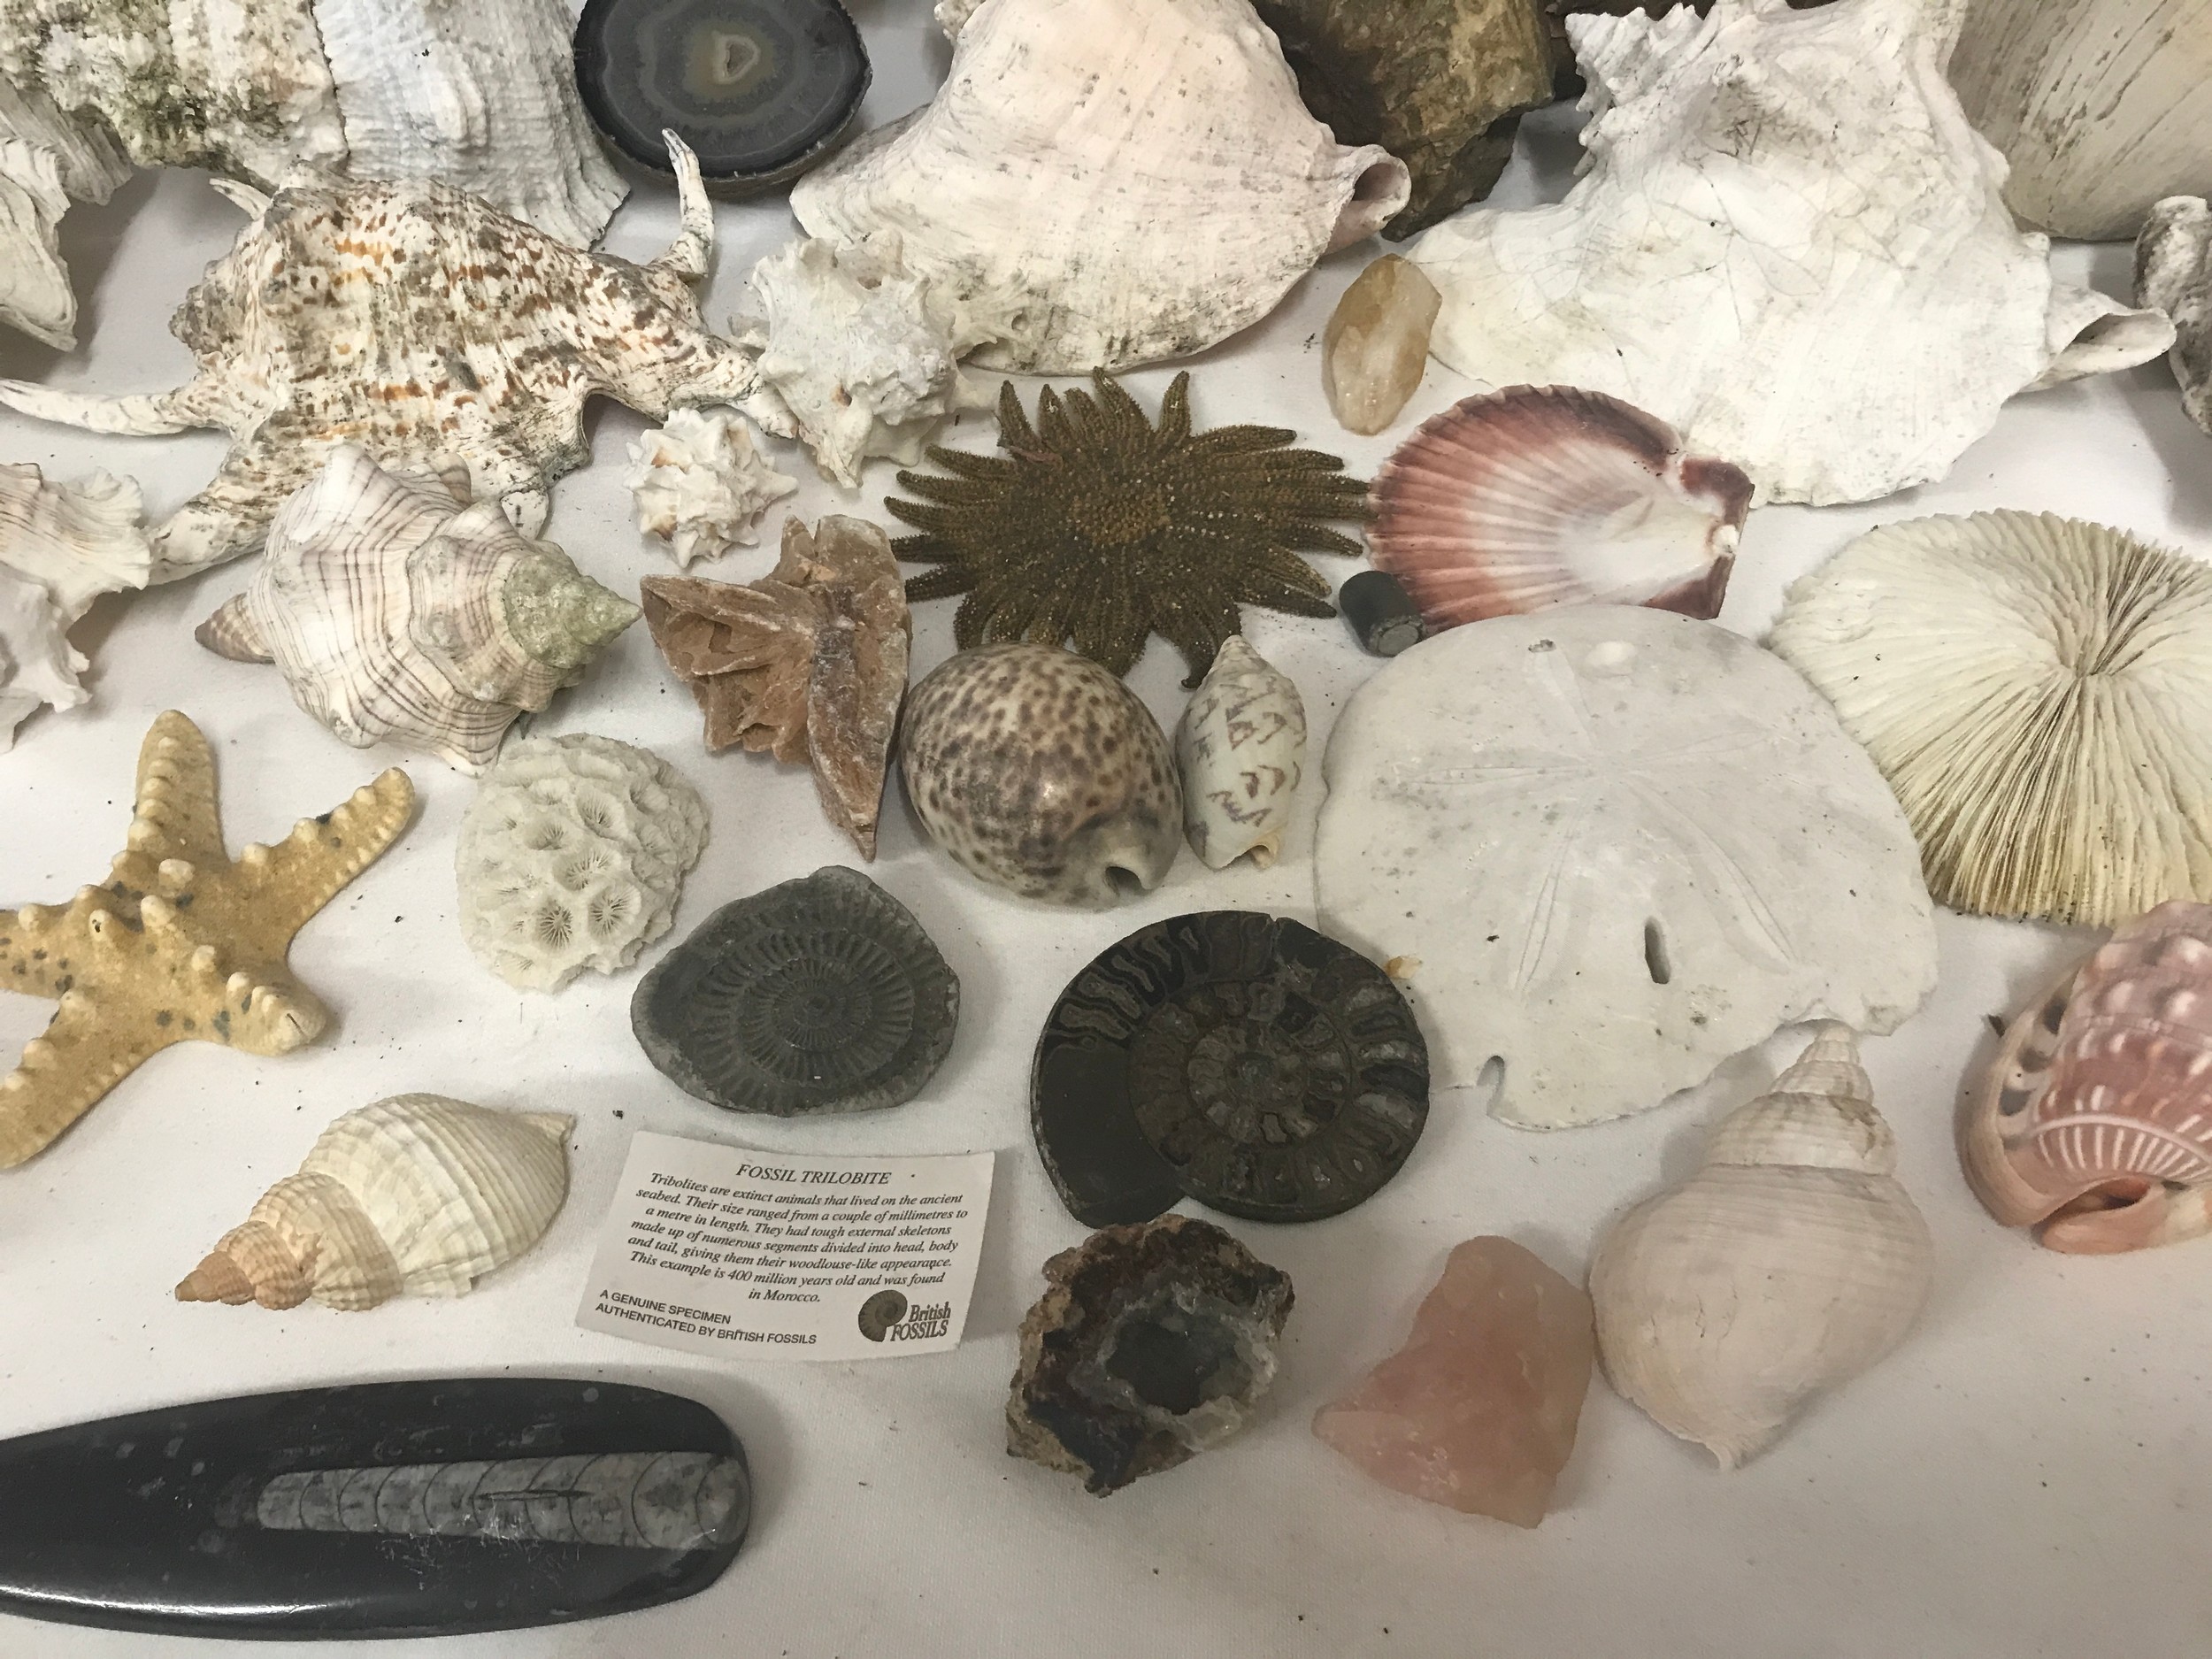 A quantity of fossils, ammonites, seashells, quartz, star fishes etc. No trilobite included. - Image 6 of 6